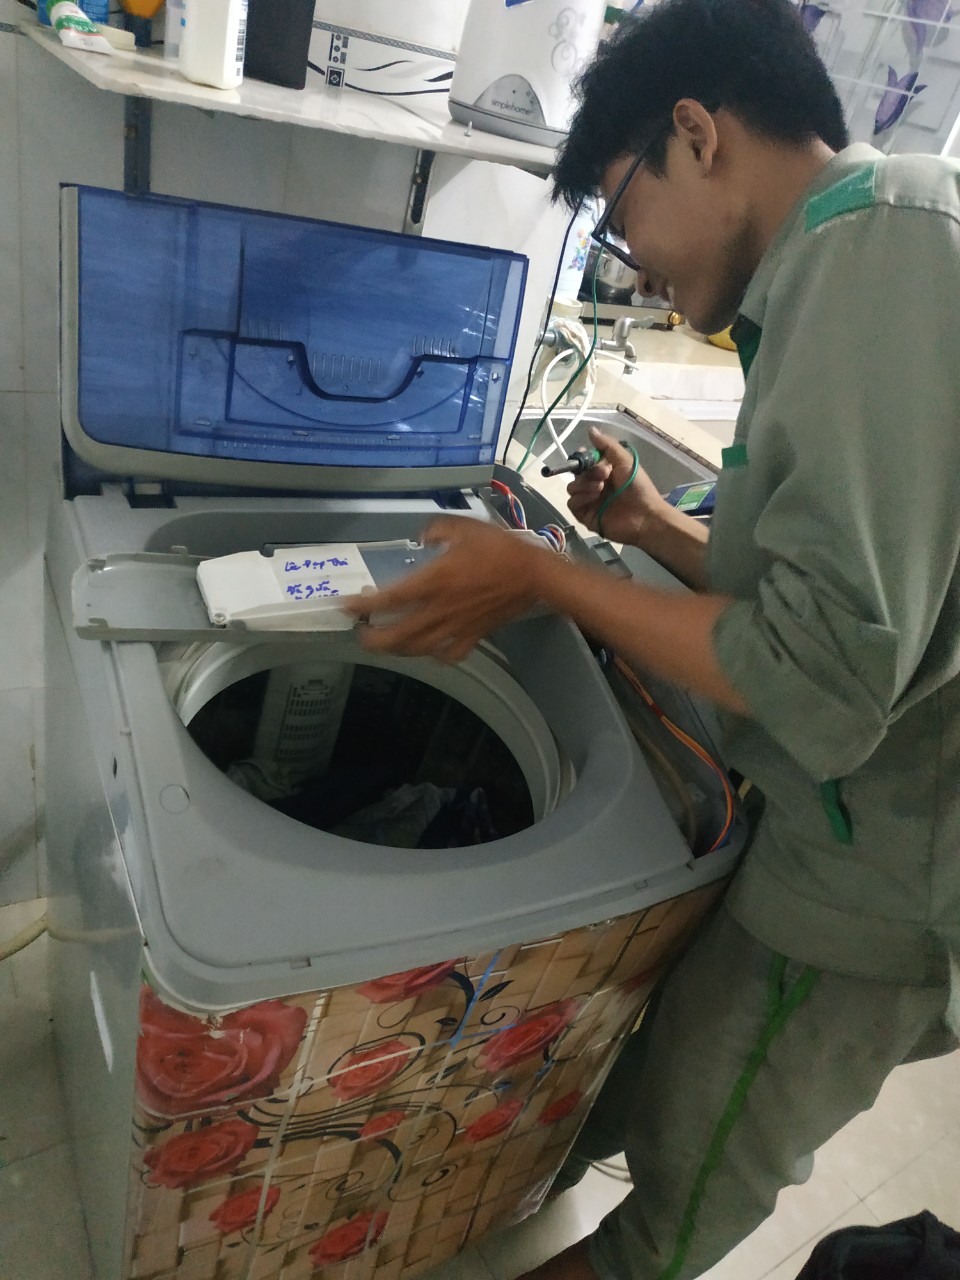 Thu mua máy giặt cũ giá cao tphcm